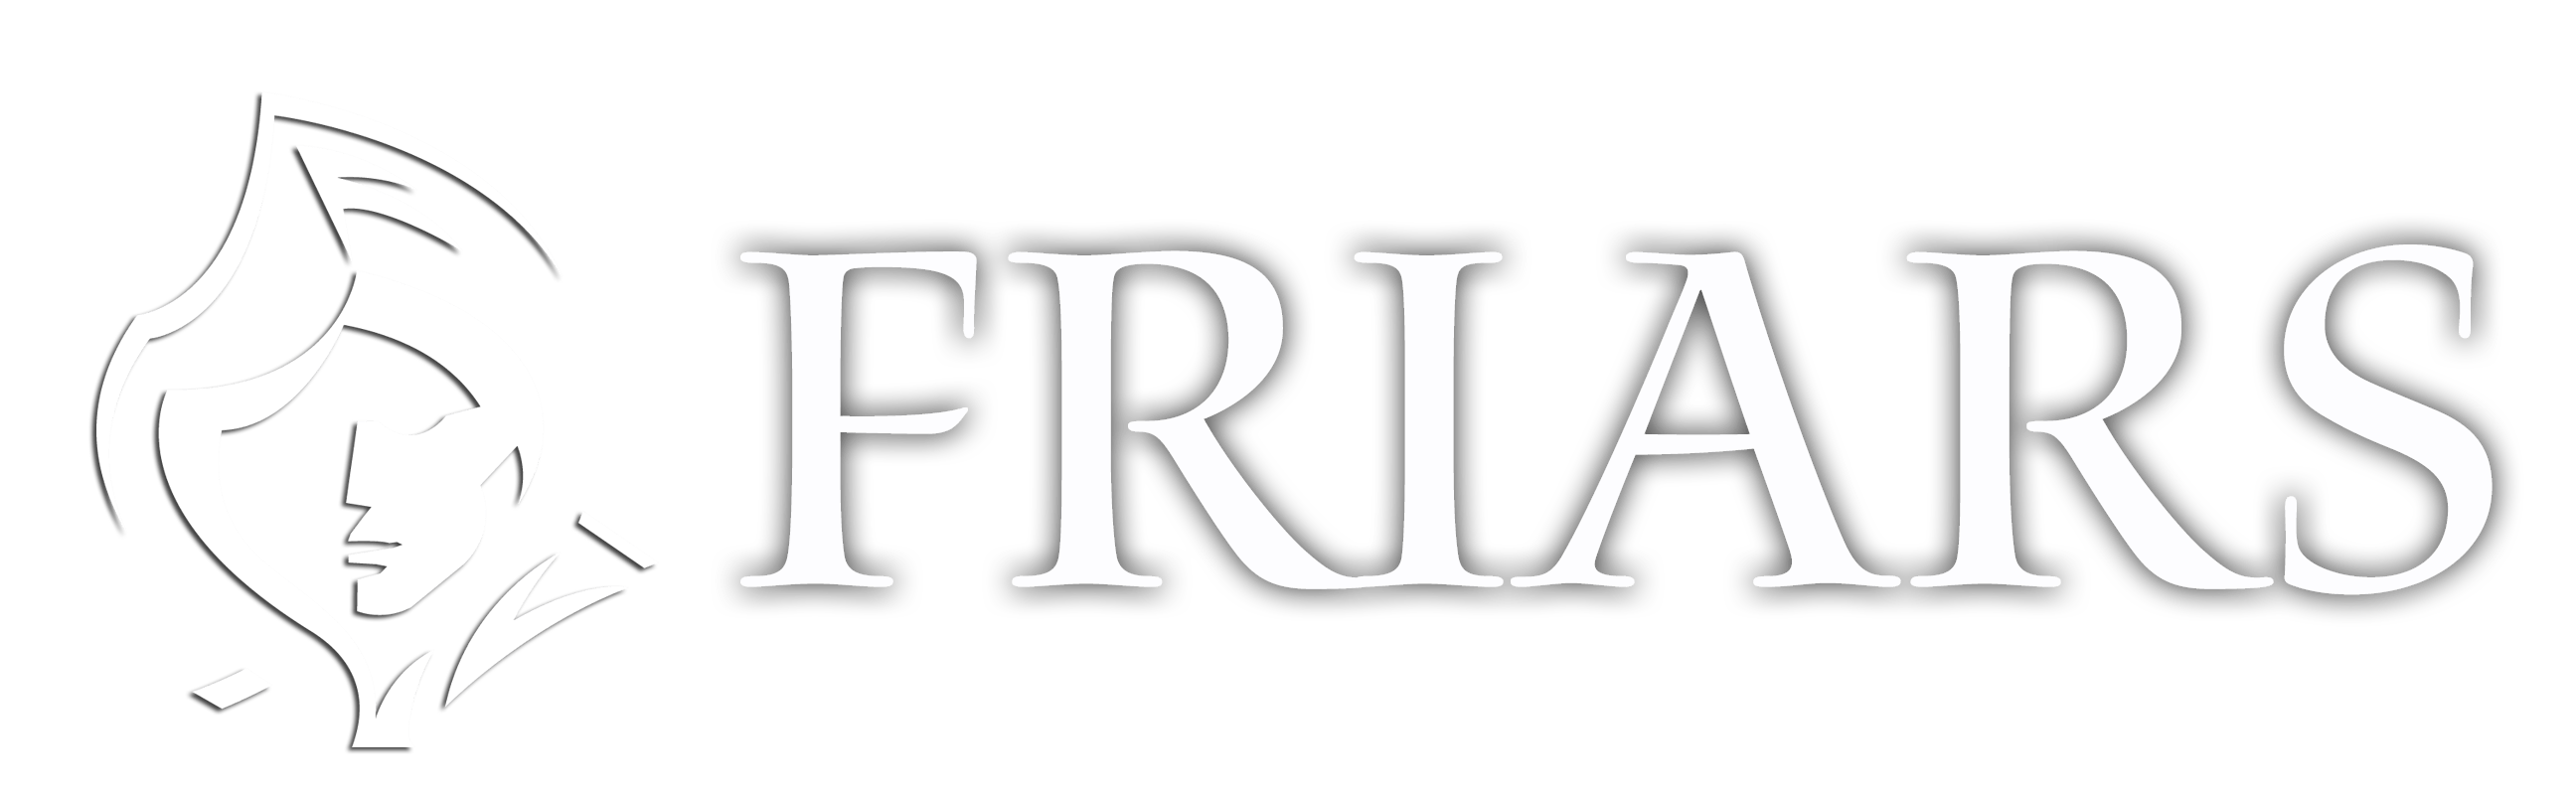 Friars Logo - Penn Friars | University of Pennsylvania - Friars Senior Society